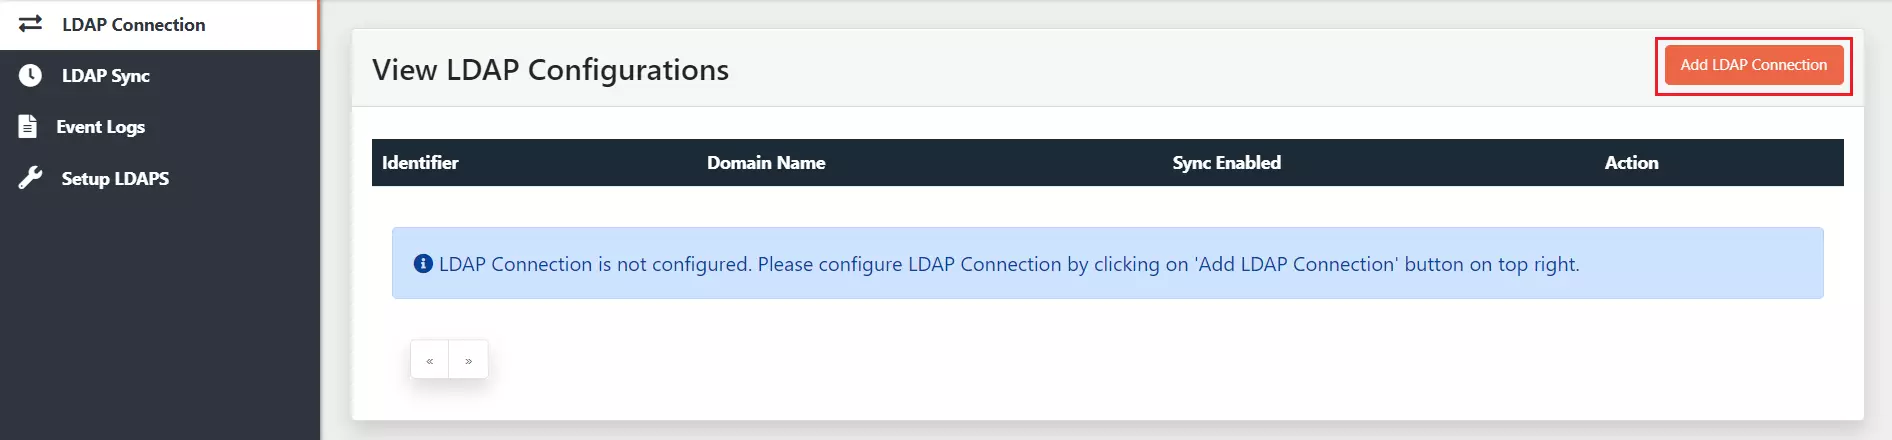 miniorange ldap gateway add ldap connection